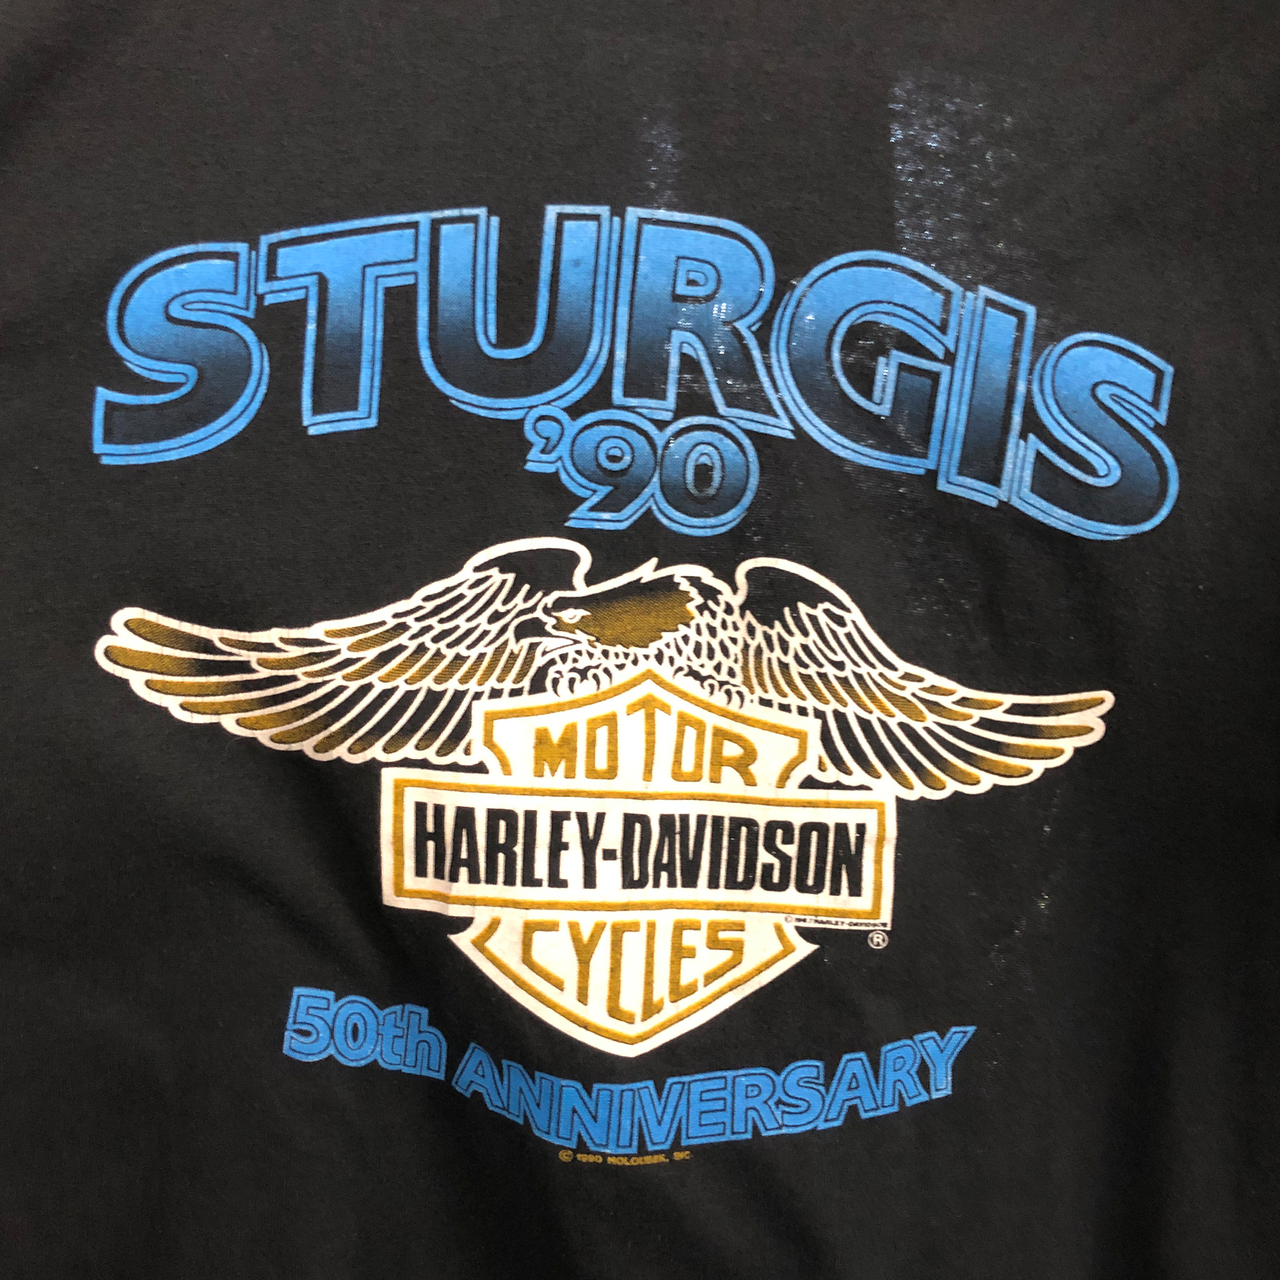 No. 89293 ('90 Sturgis Harley-Davidson)